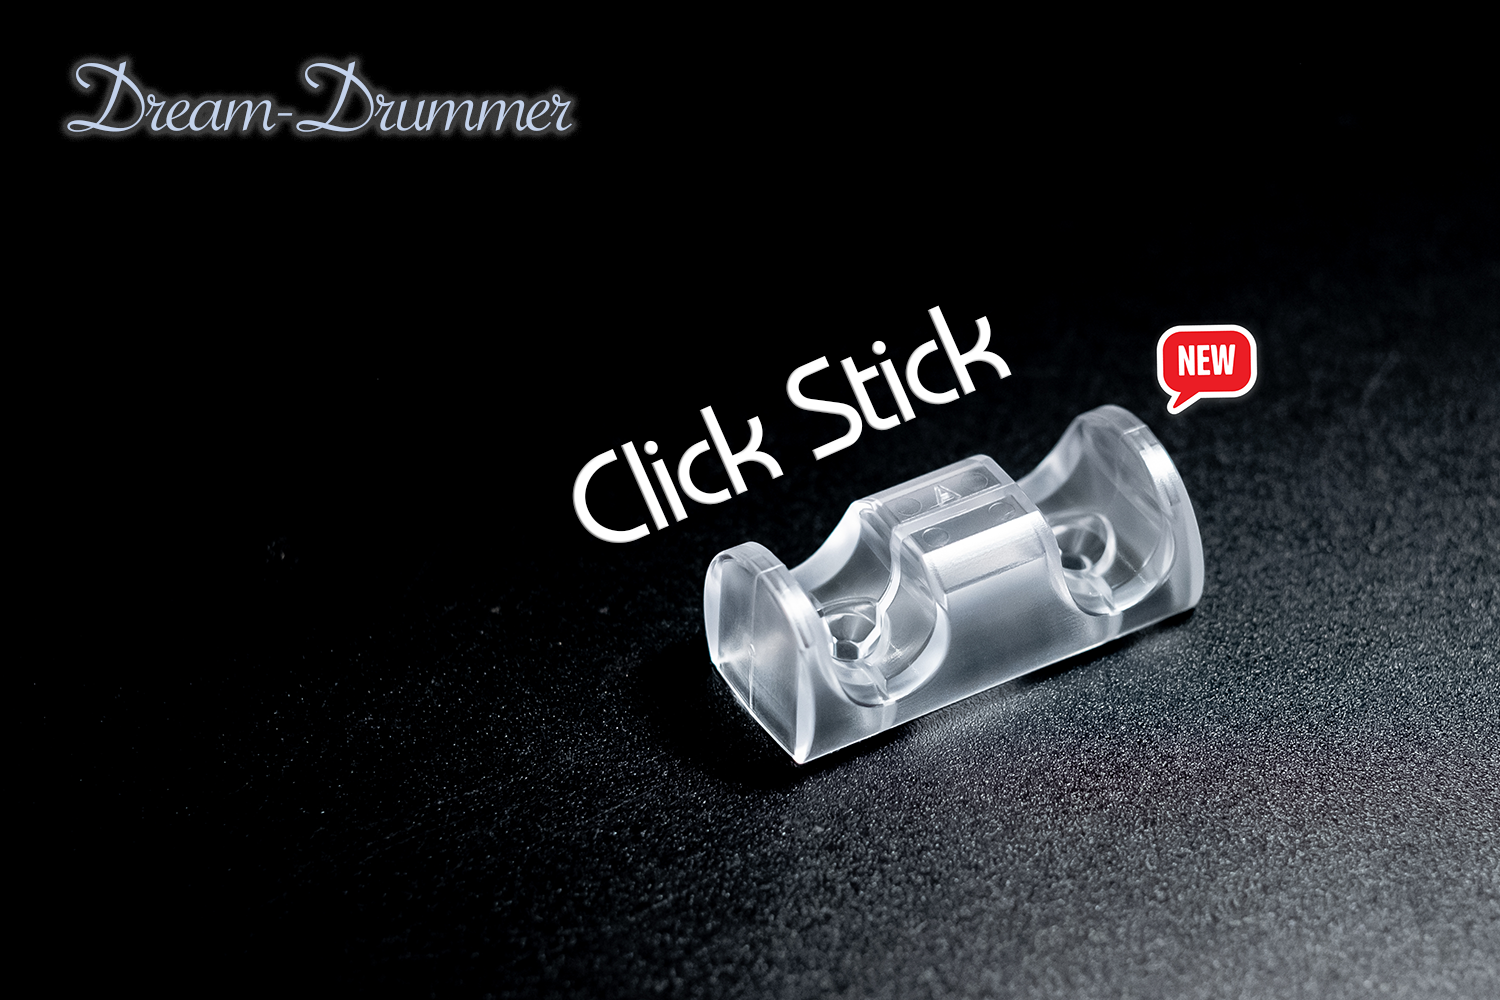 Dream-Dummer Click Stick